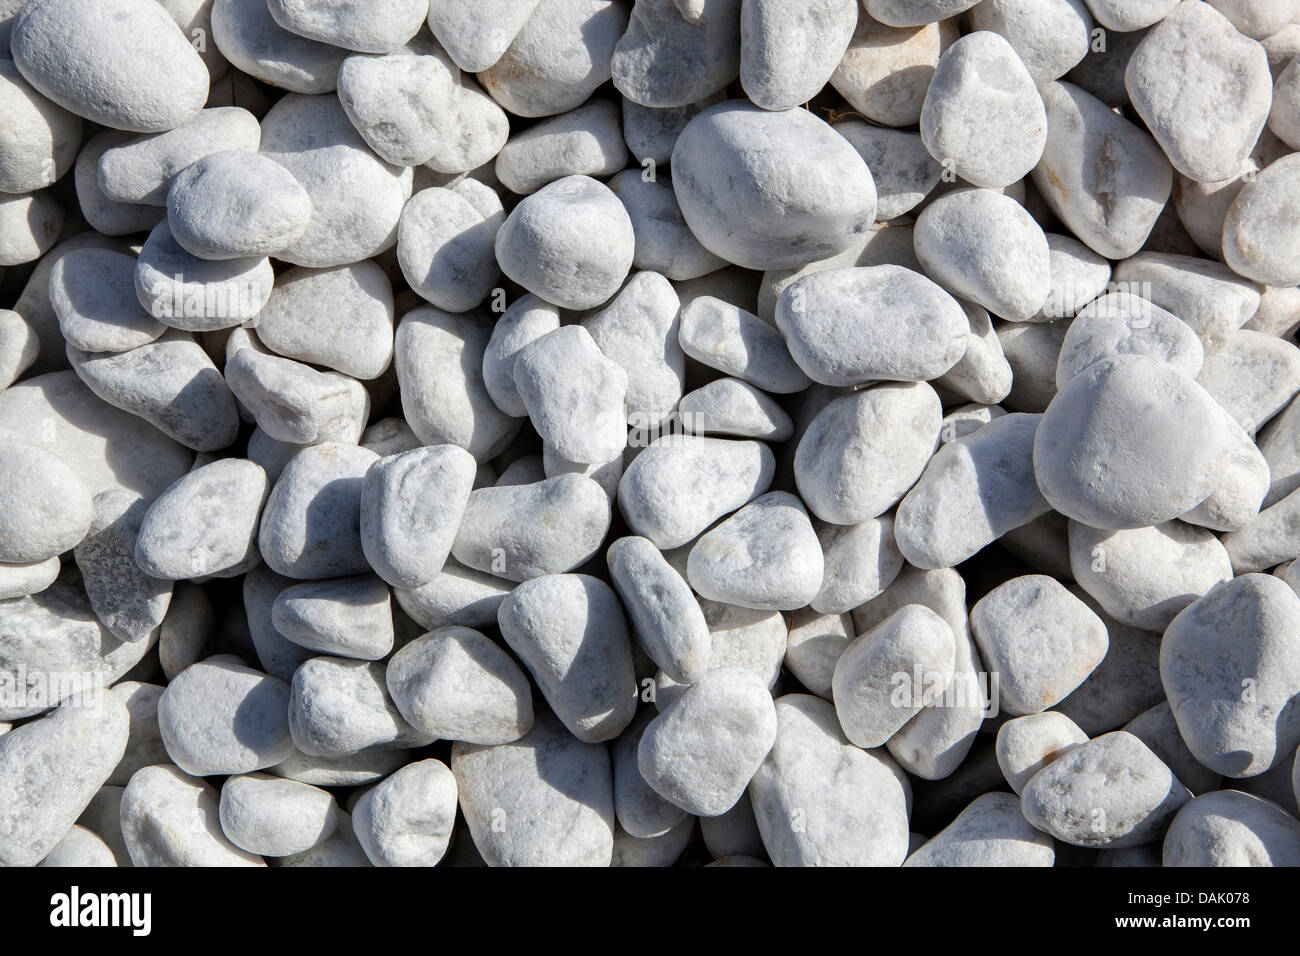 Carrara marble gravel, pebbles Stock Photo